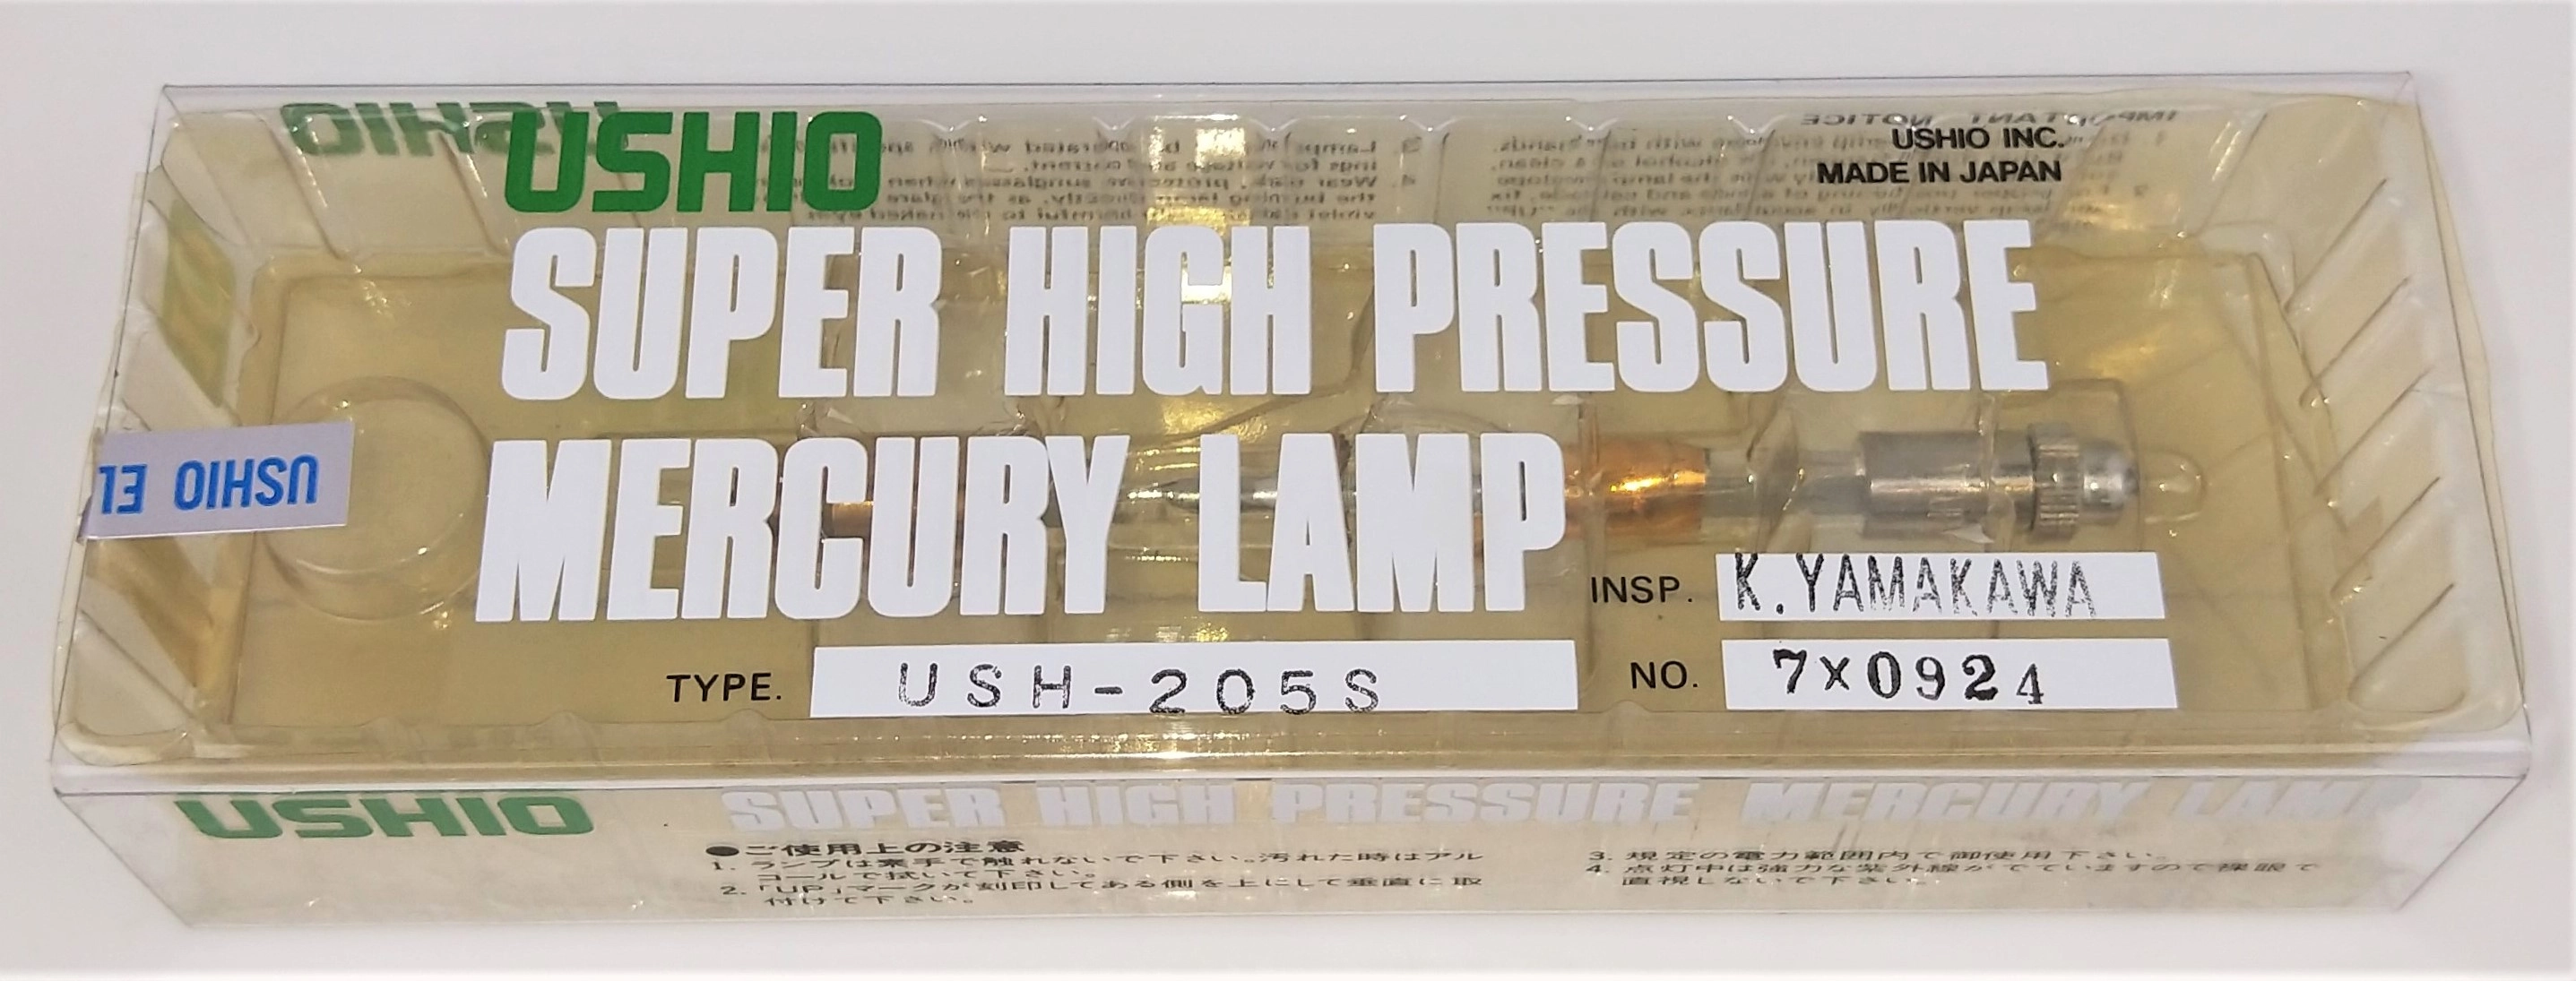 Ushio USH-205S Super High Pressure Mercury Lamp